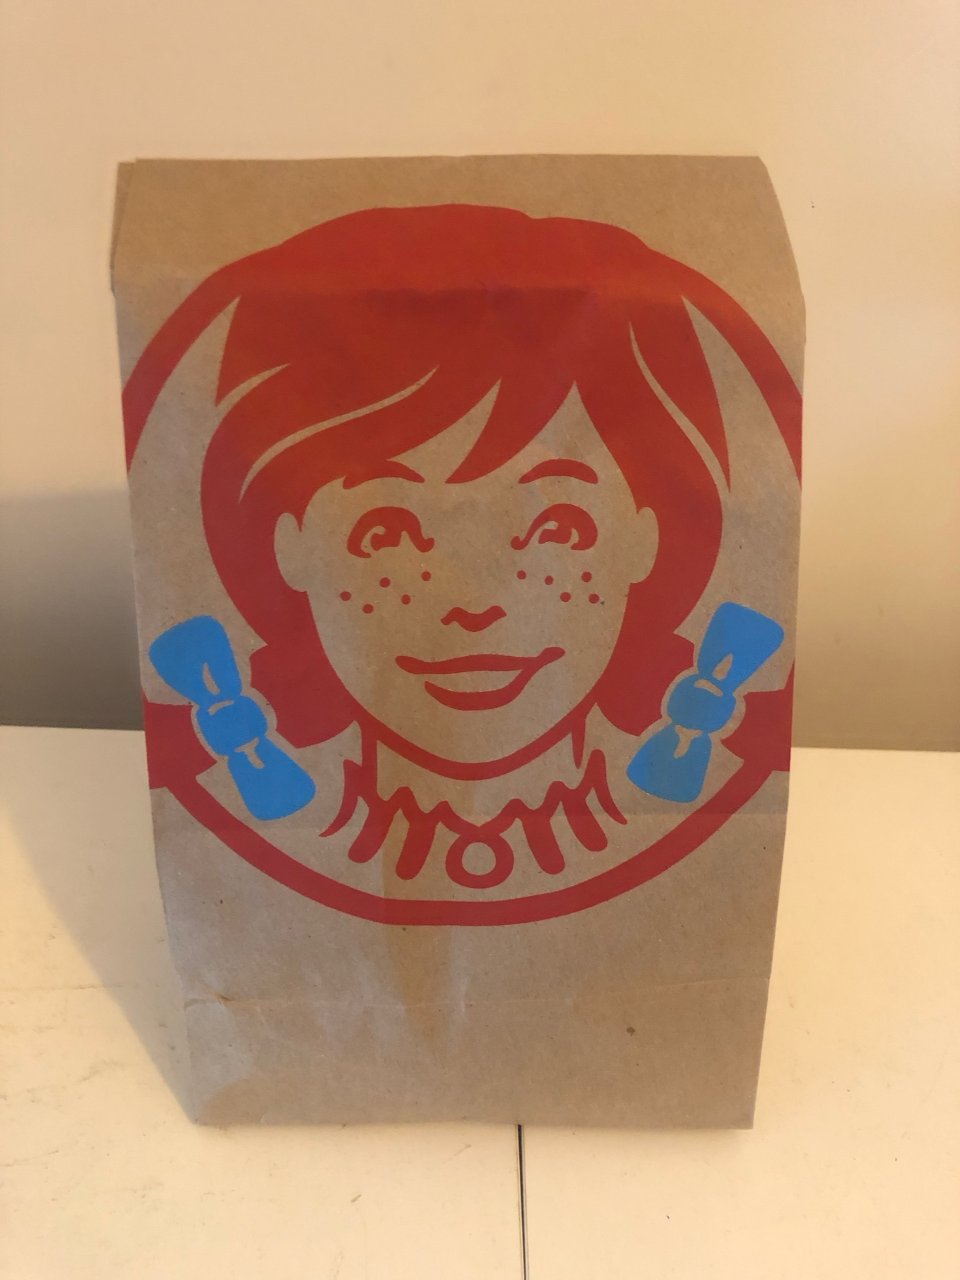 Free Wendy’s burger...